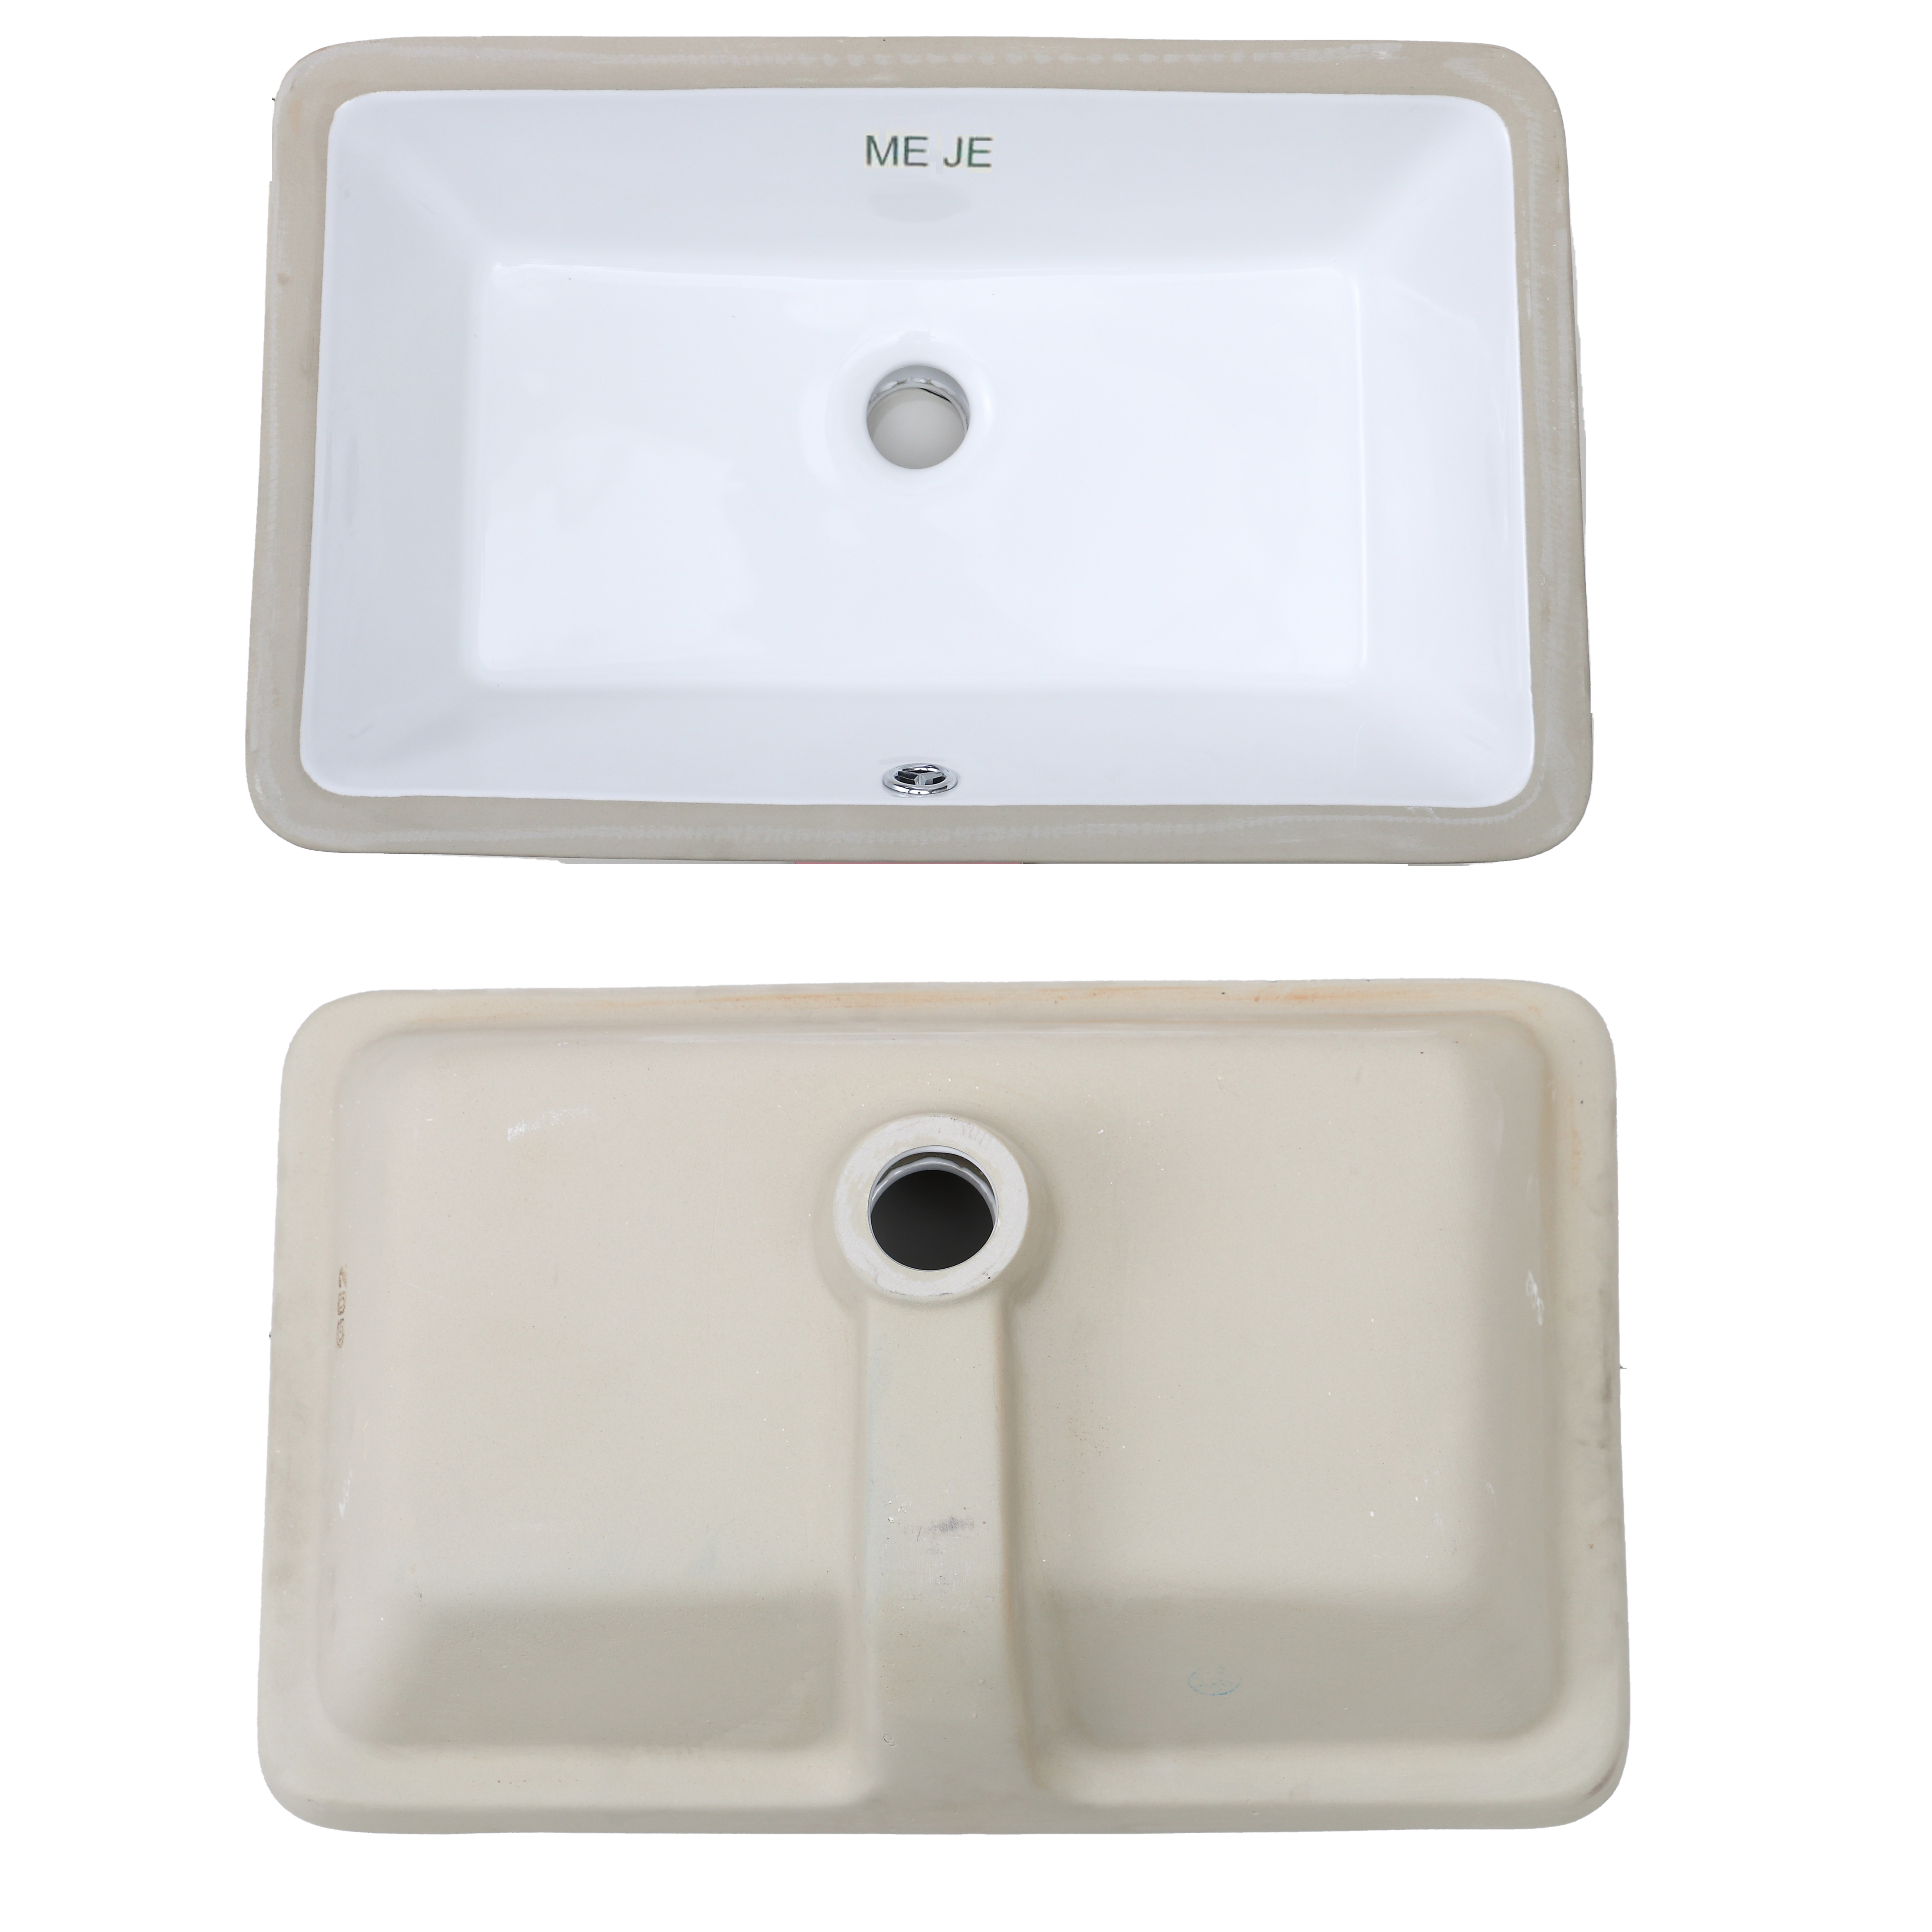 MEJE #202A -20.9 Inch Undermount Sink, Rectrangle Undercounter Bathroom Sink,Ceramic Lavatory Vanity Vessel Sink- White